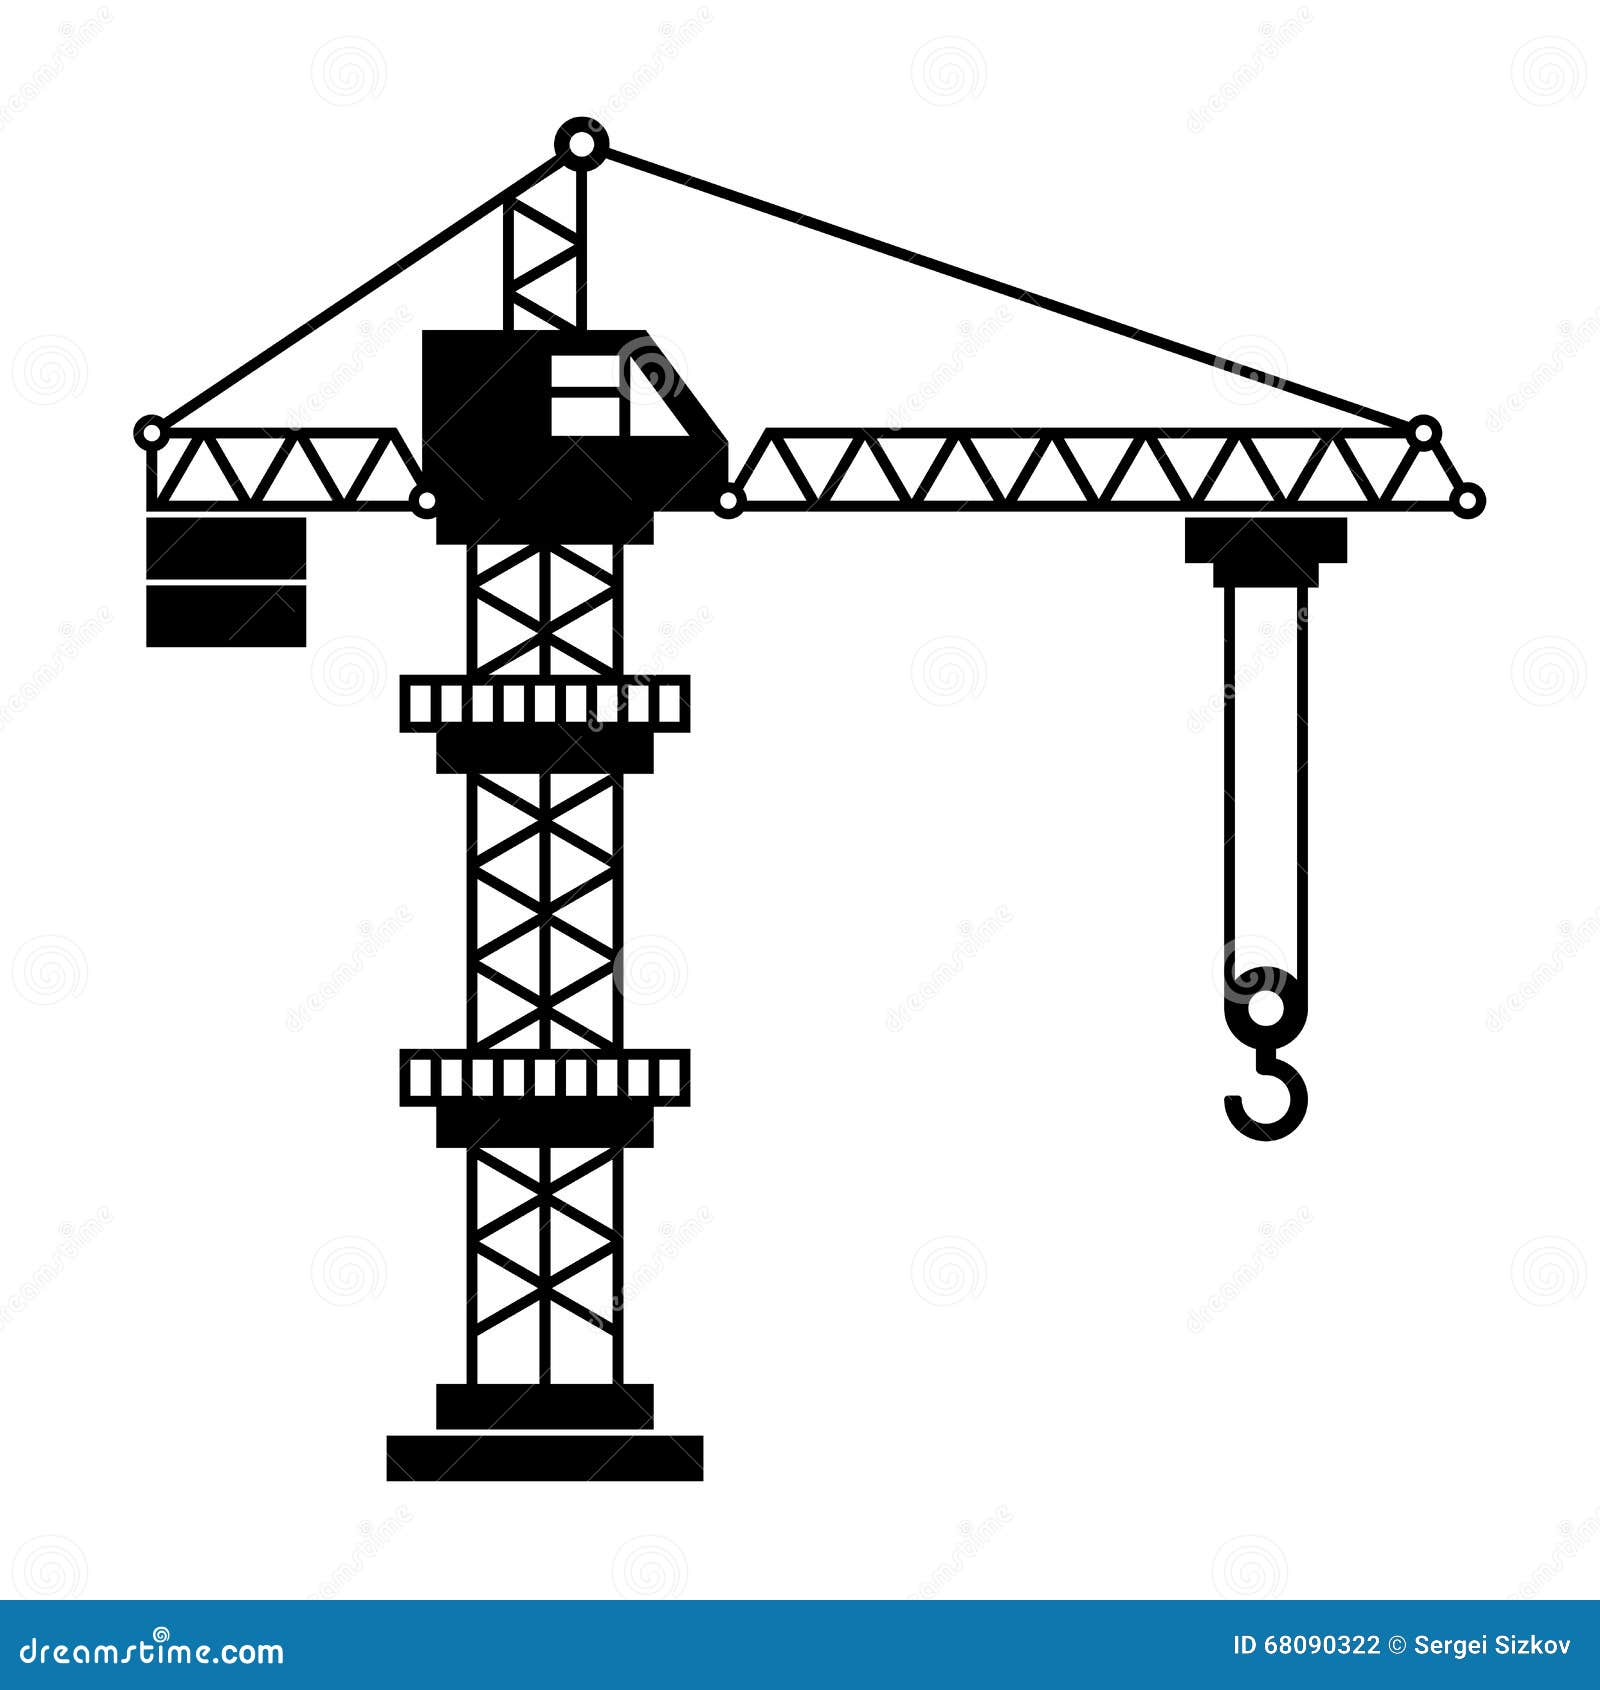 tower crane icon in white background. 